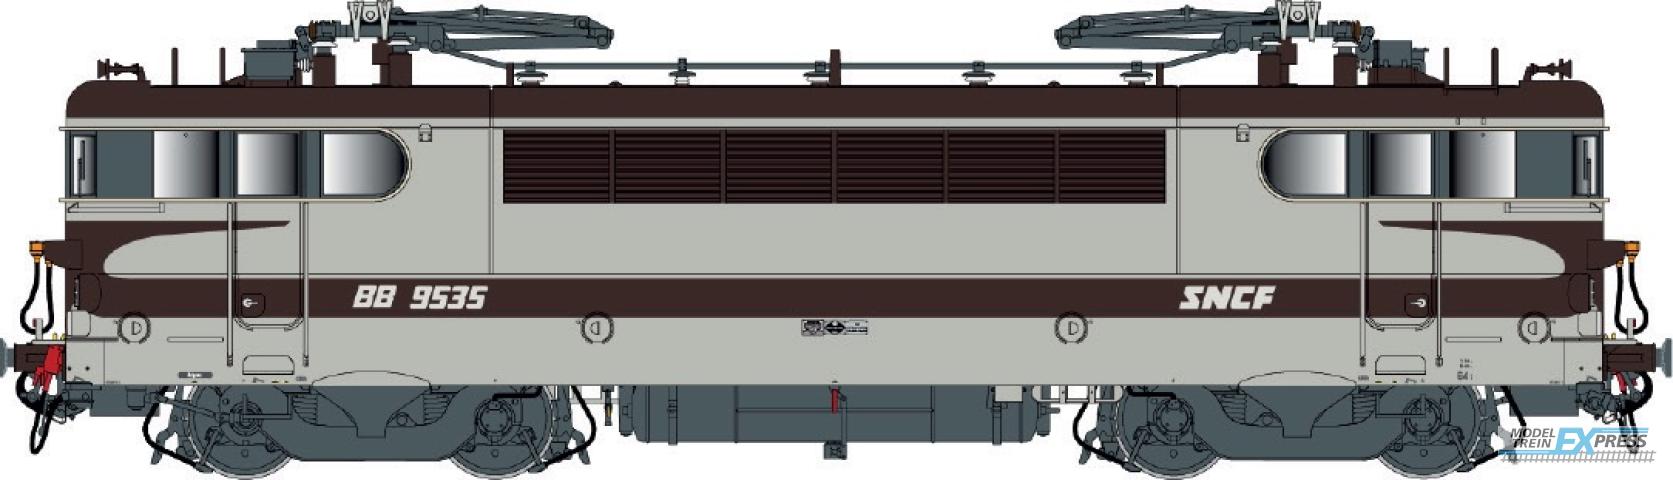 LS Models 10726 BB 9400, grijs/bruin/oranje, Arzens, vet logo  /  Ep. IV-V  /  SNCF  /  HO  /  AC  /  1 P.